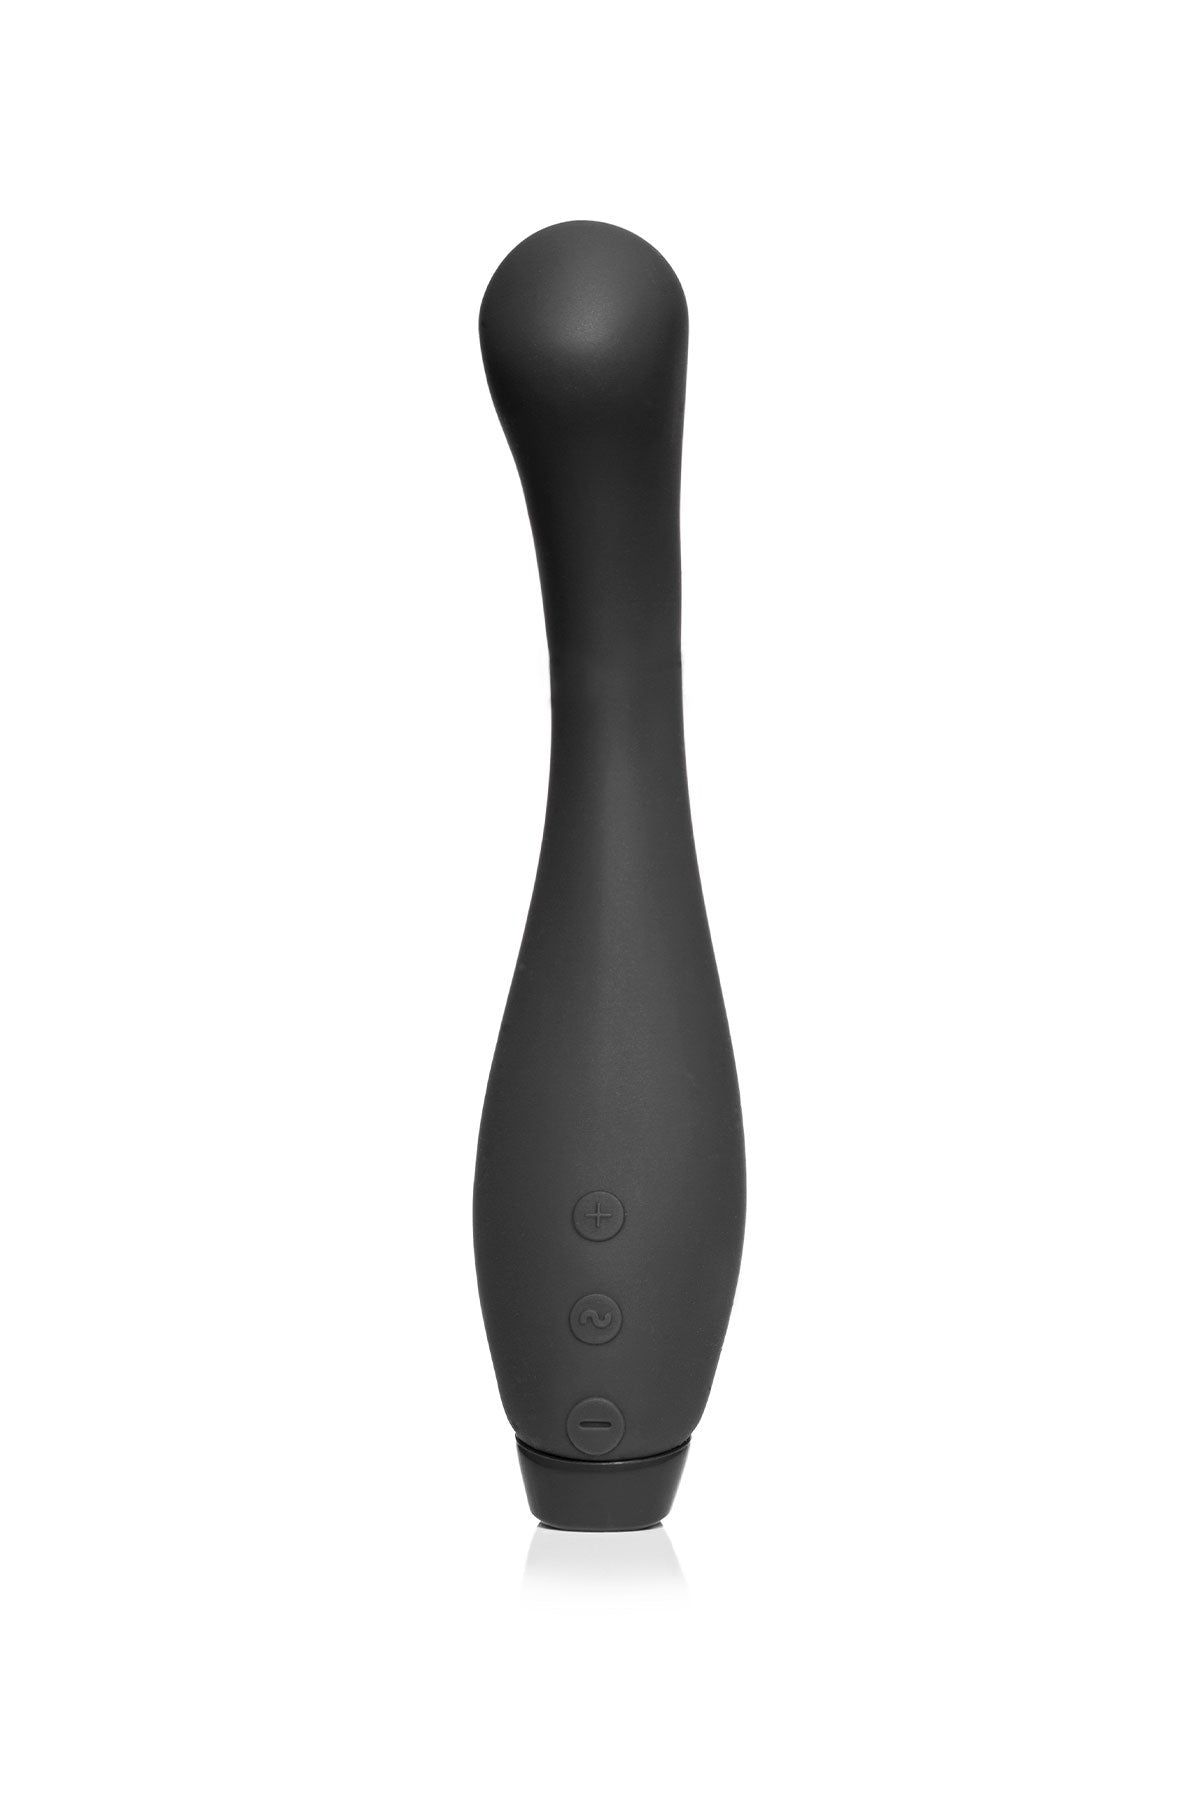 Juno Flex | G-Spot Vibrator